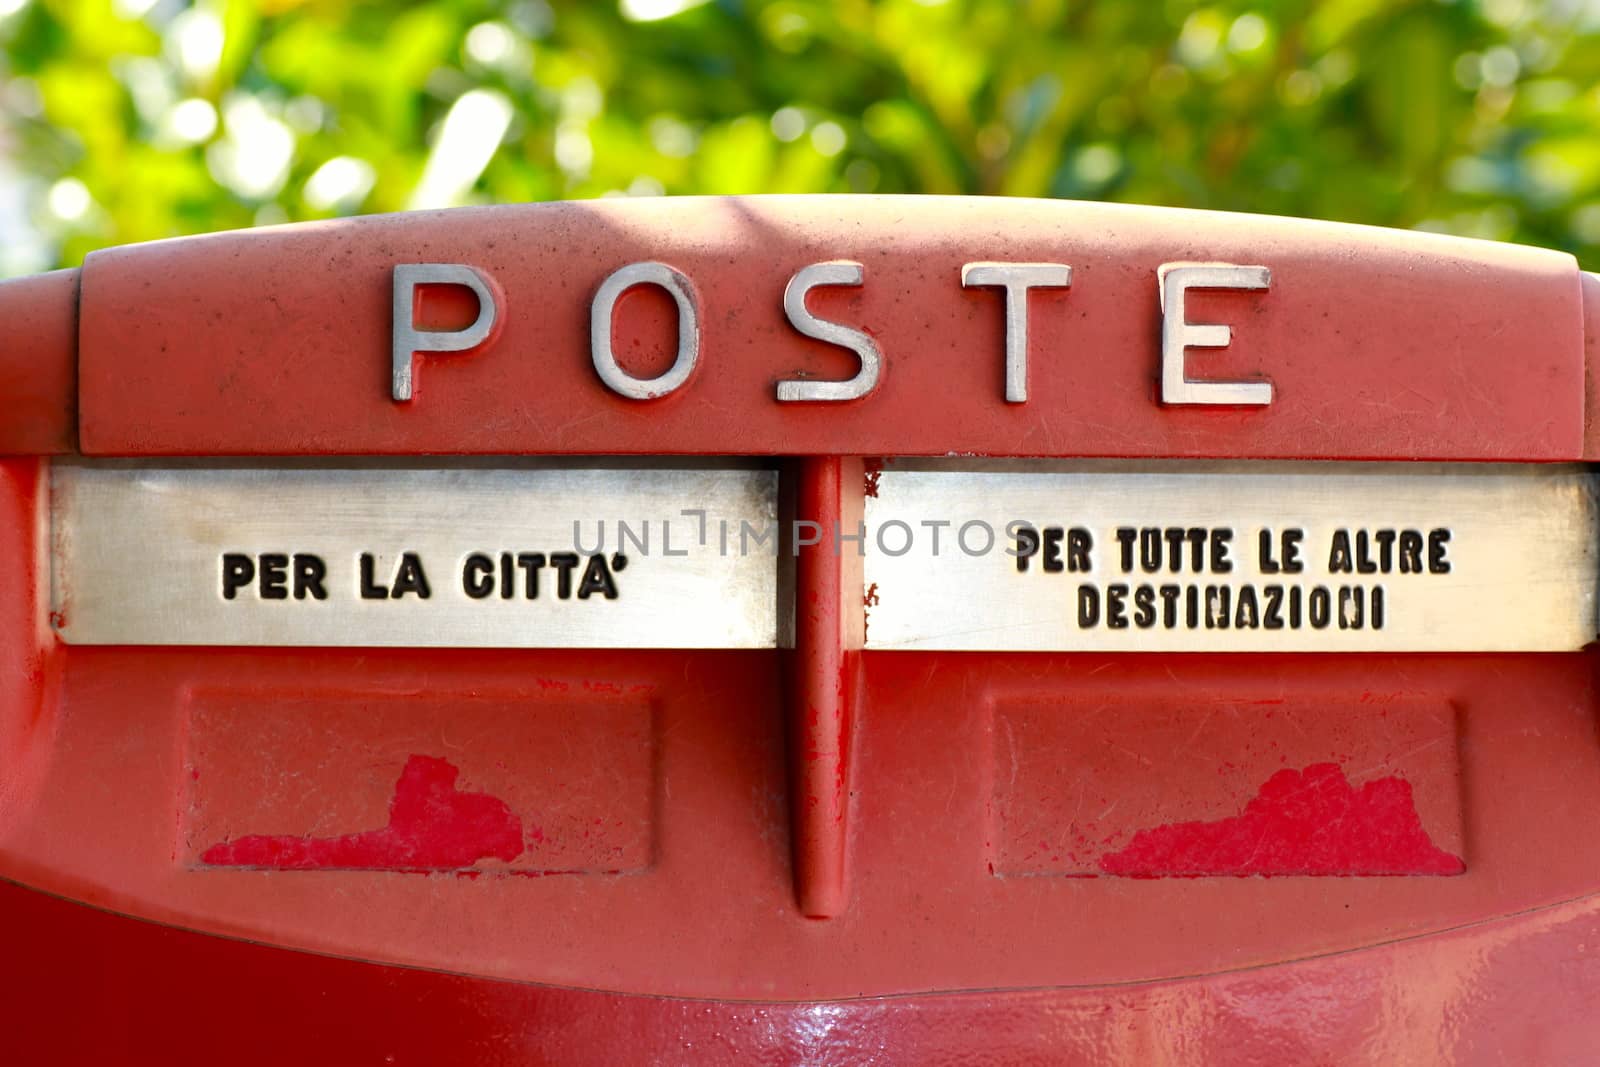 Poste: italian mailbox